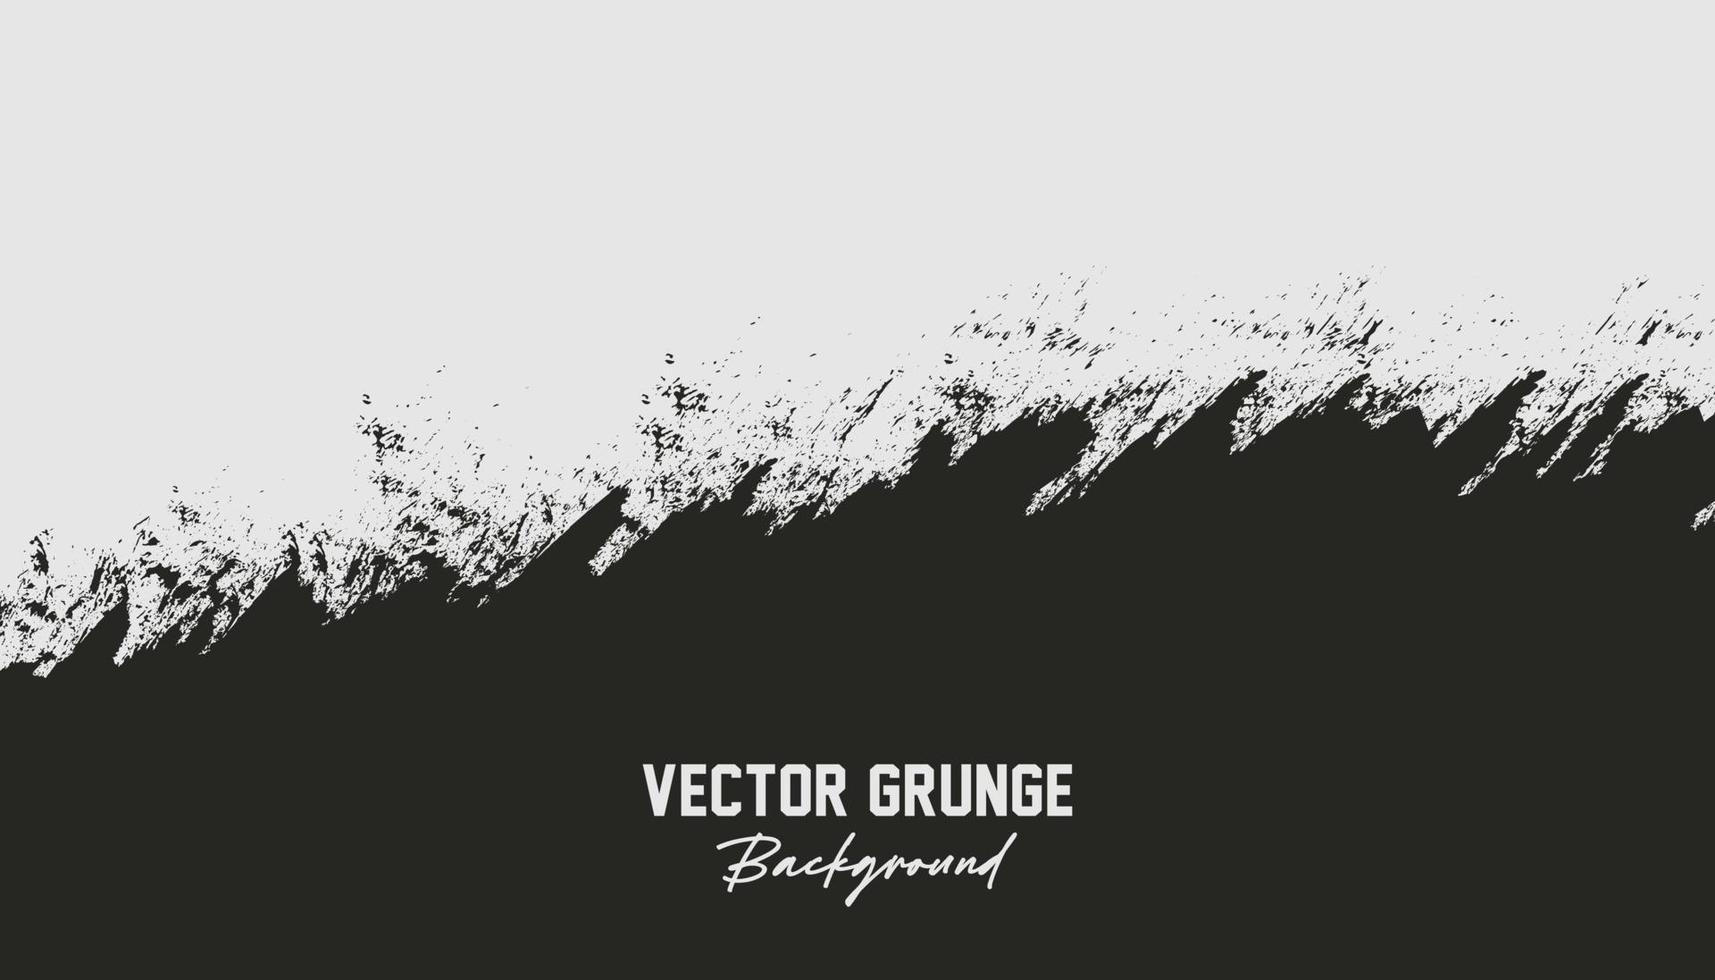 abstract dirty grunge texture splat background design vetor vector